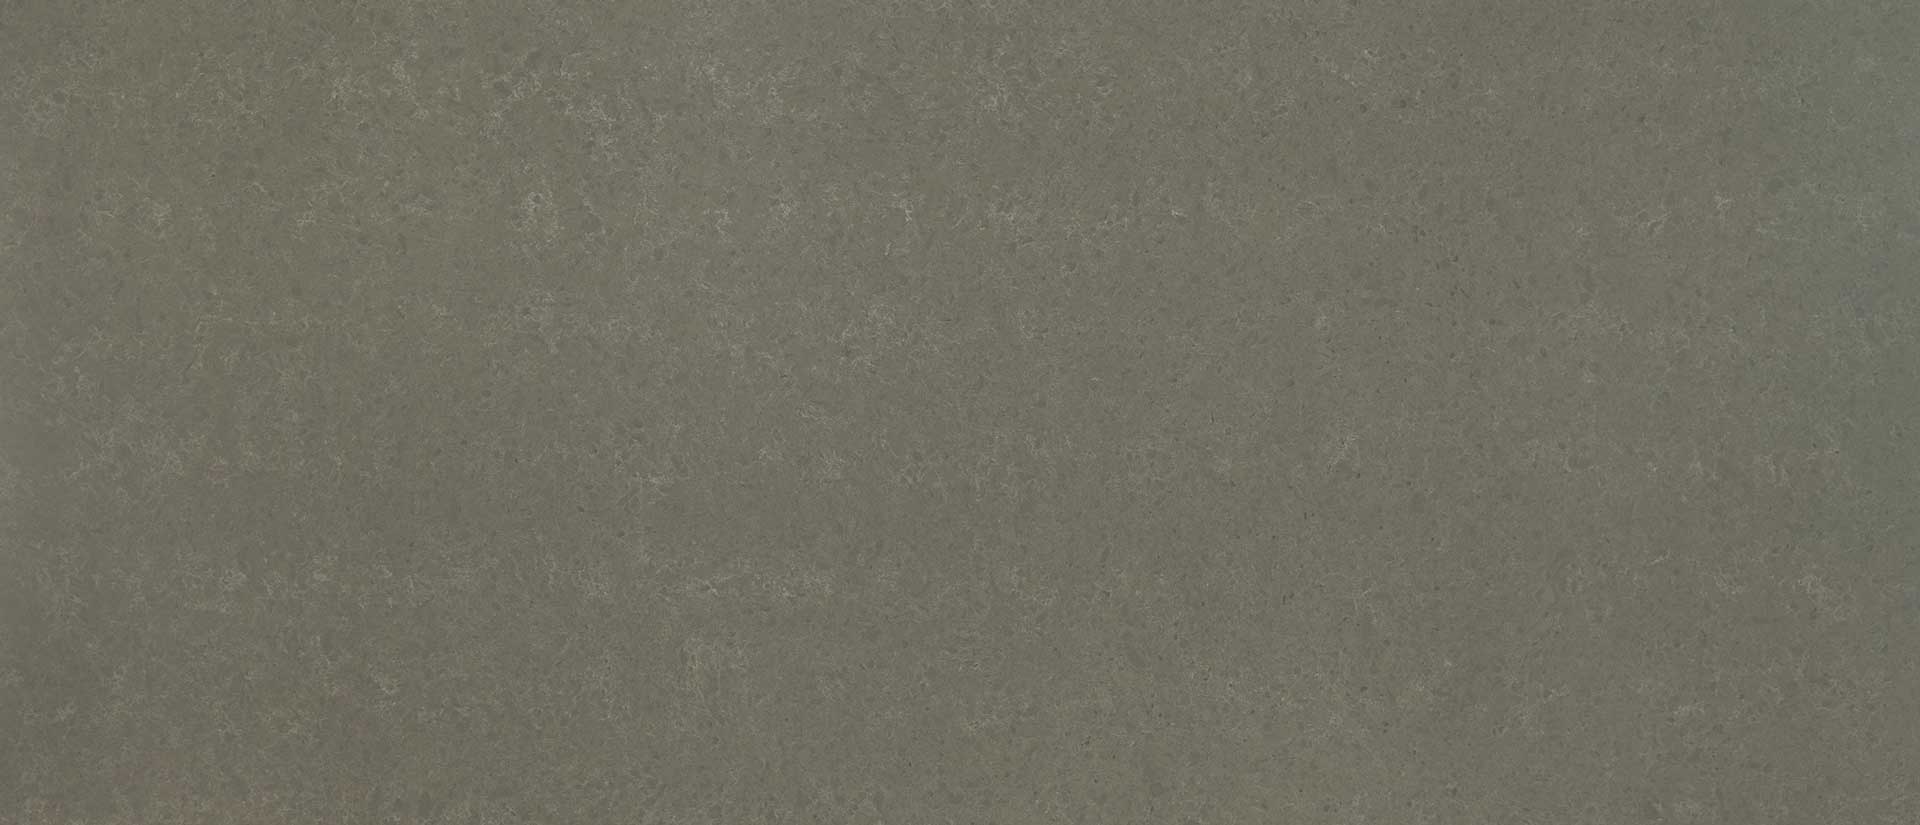 babylon-gray-concrete-quartz